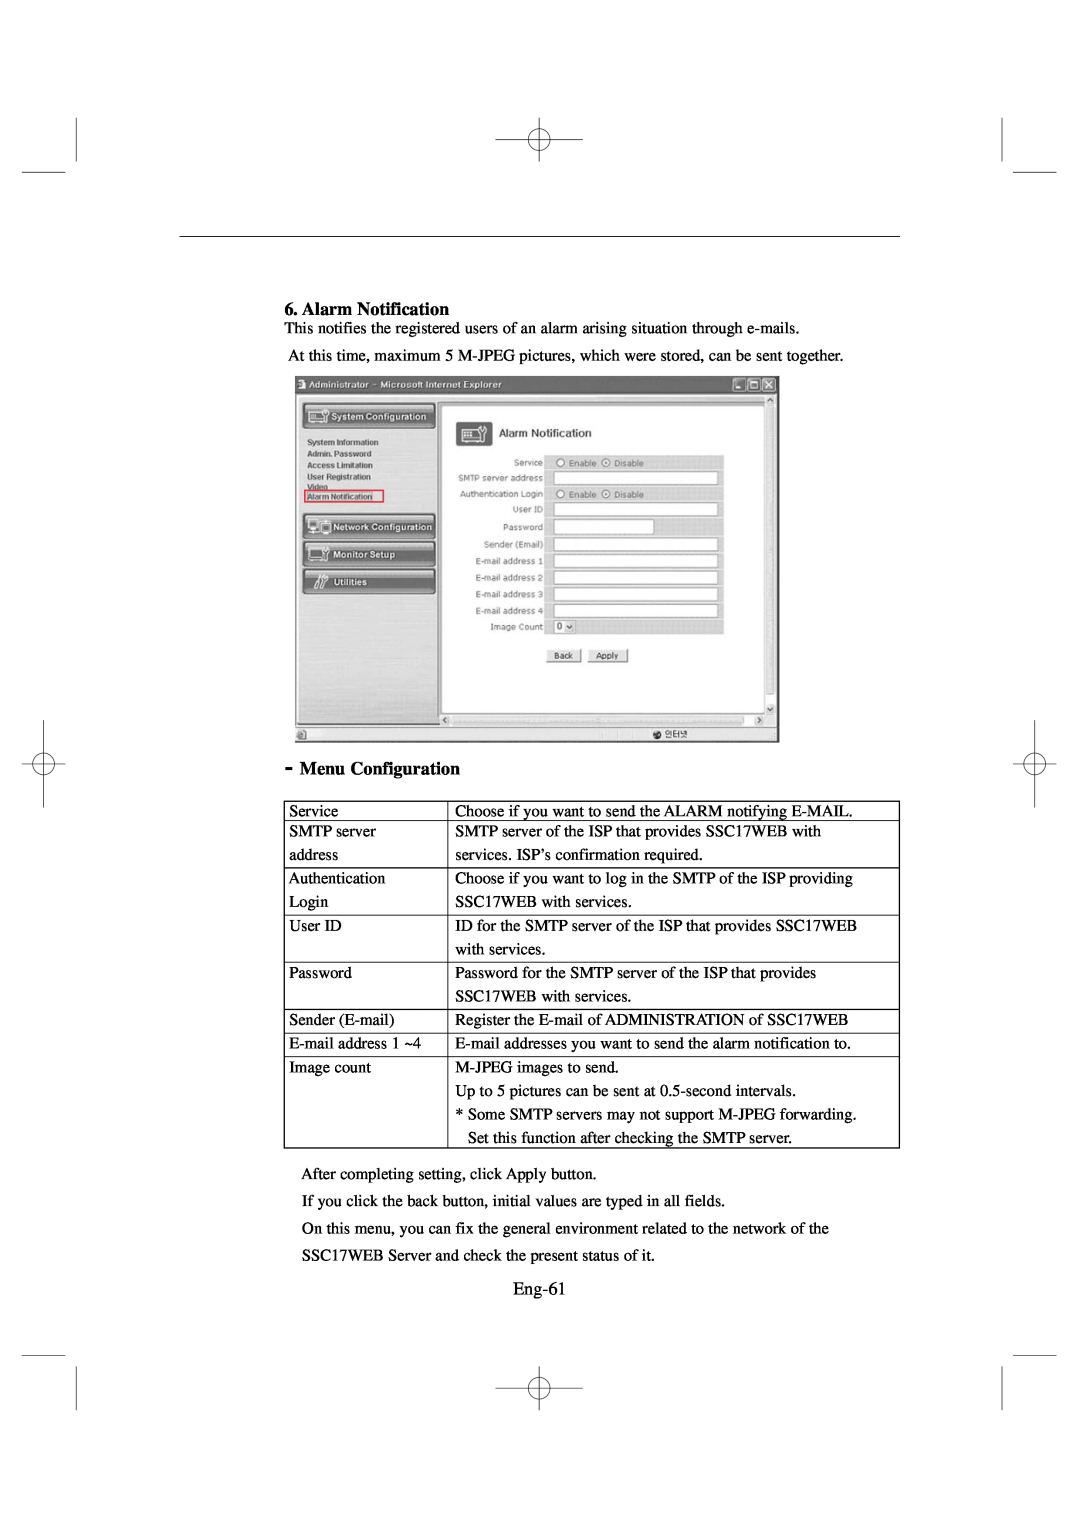 Samsung SSC17WEB manual Alarm Notification, Menu Configuration, Eng-61 